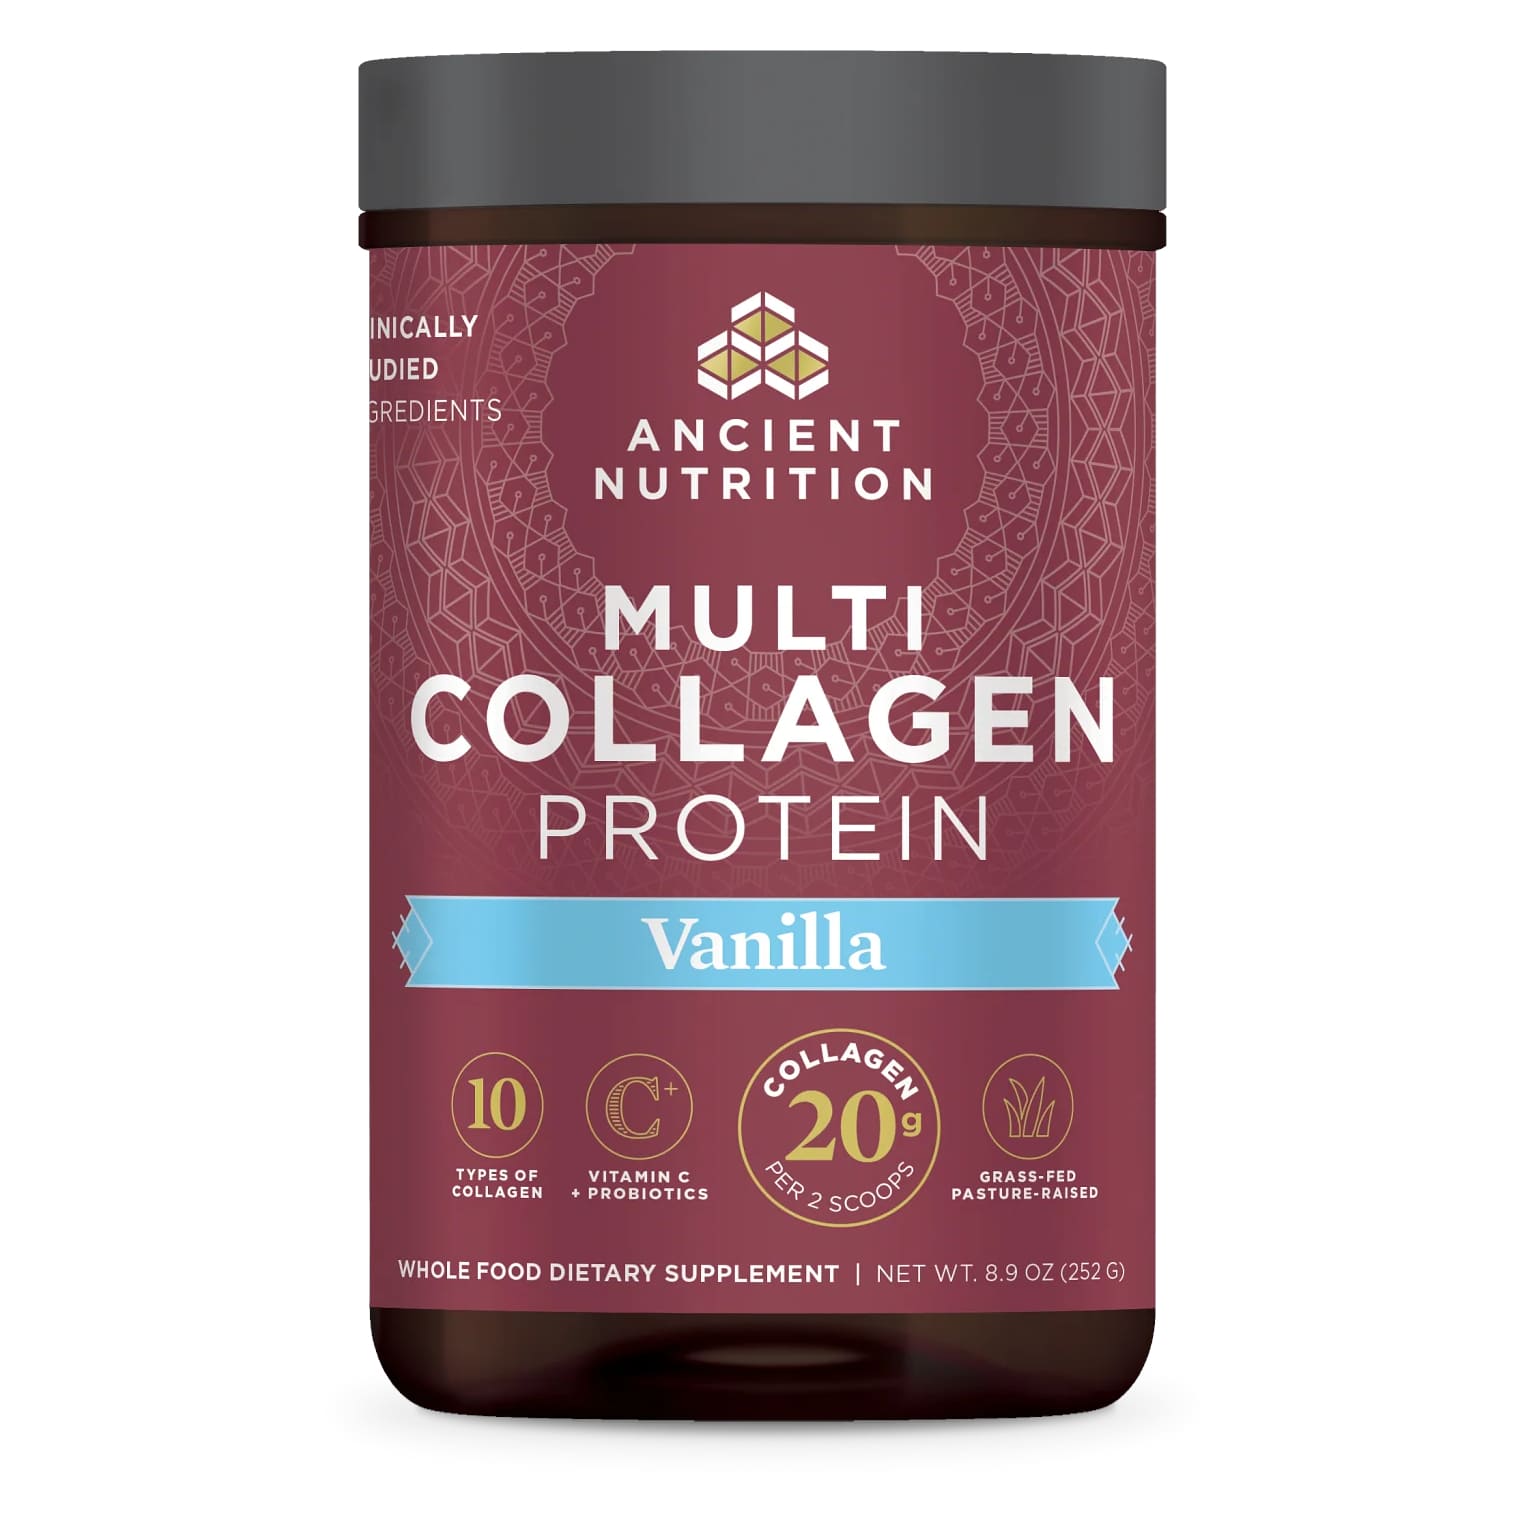 Коллаген Ancient Nutrition Multi Protein 10 Types Vitamin C + Probiotics Vanilla, 252 г биологически активная добавка beguana коллаген 180 гр